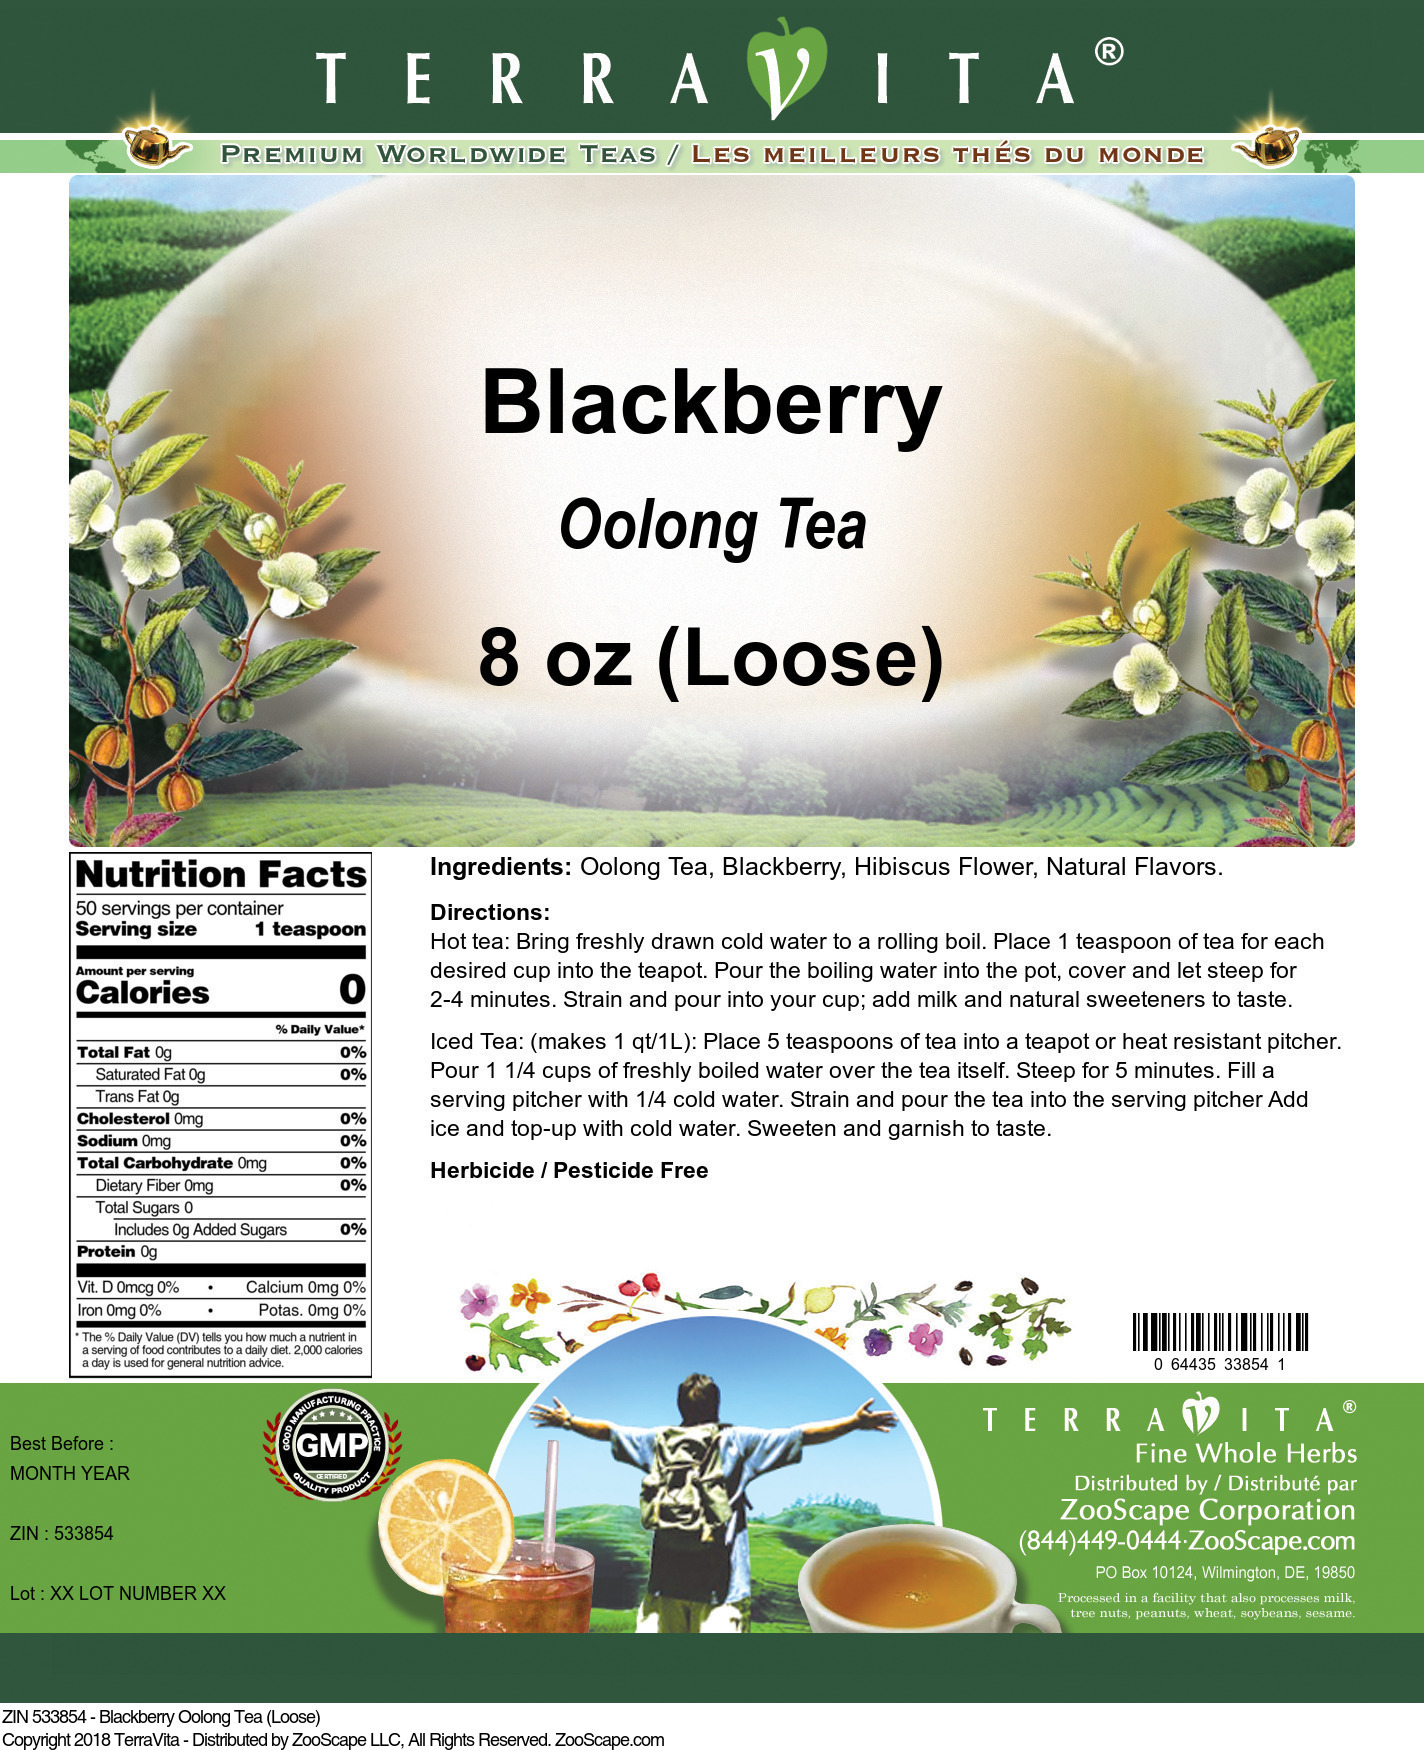 Blackberry Oolong Tea (Loose) - Label